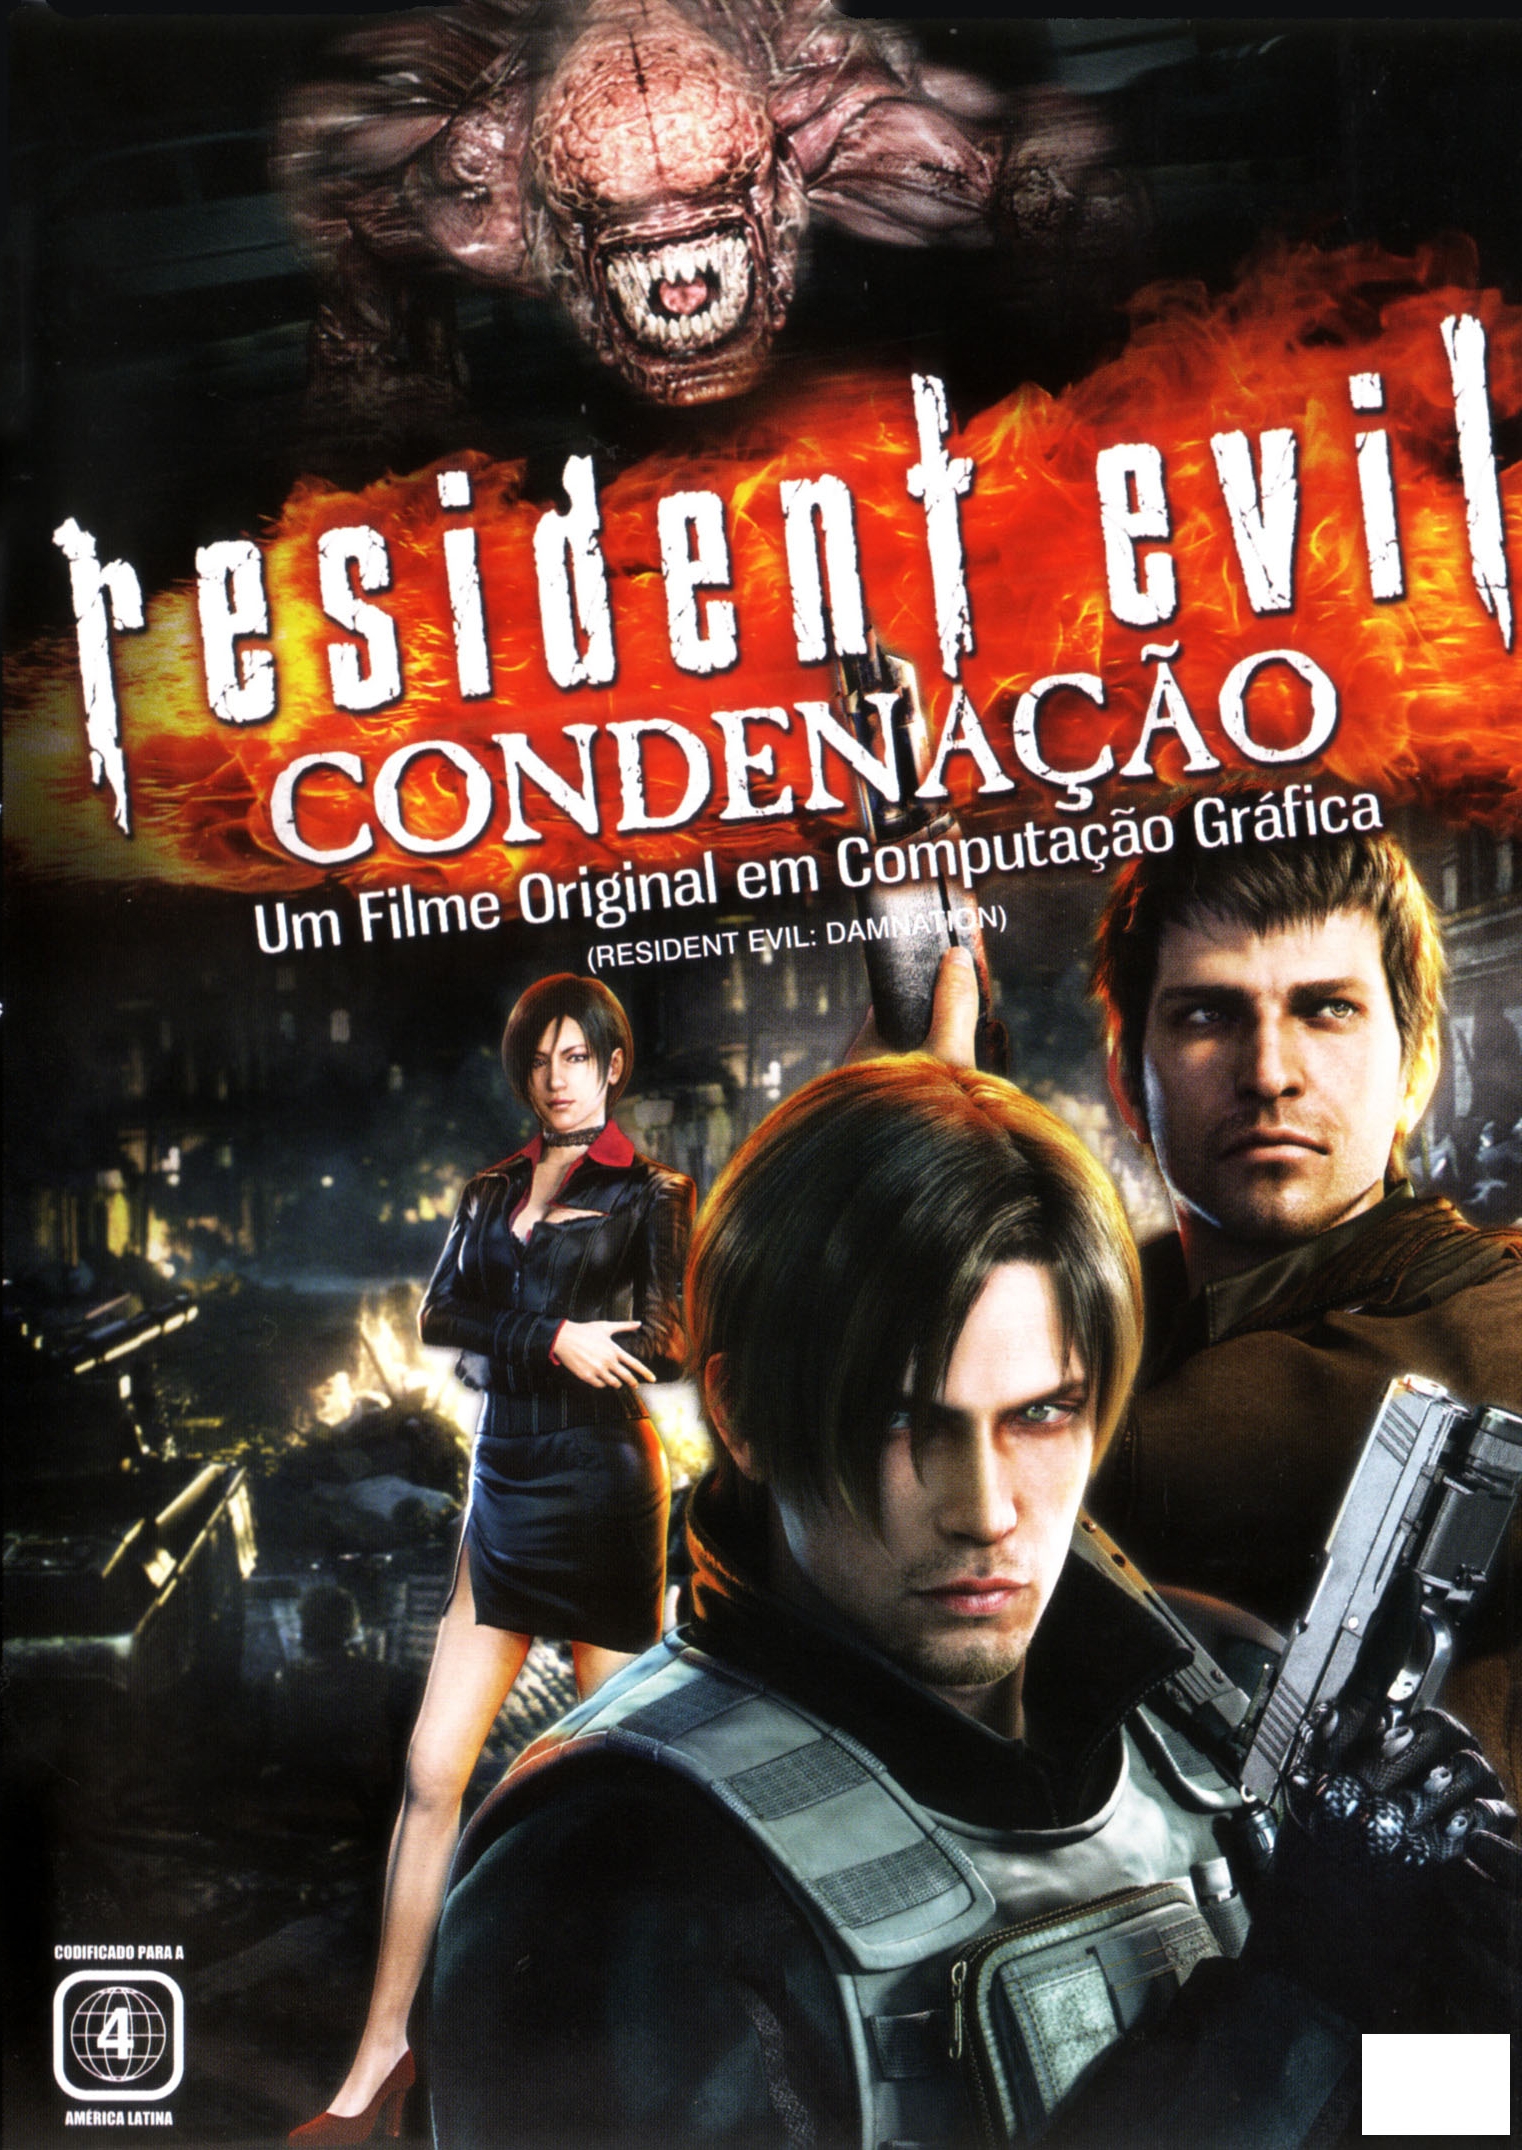 Resident Evil: Death Island' é a sequência de 'Resident Evil: Vendetta